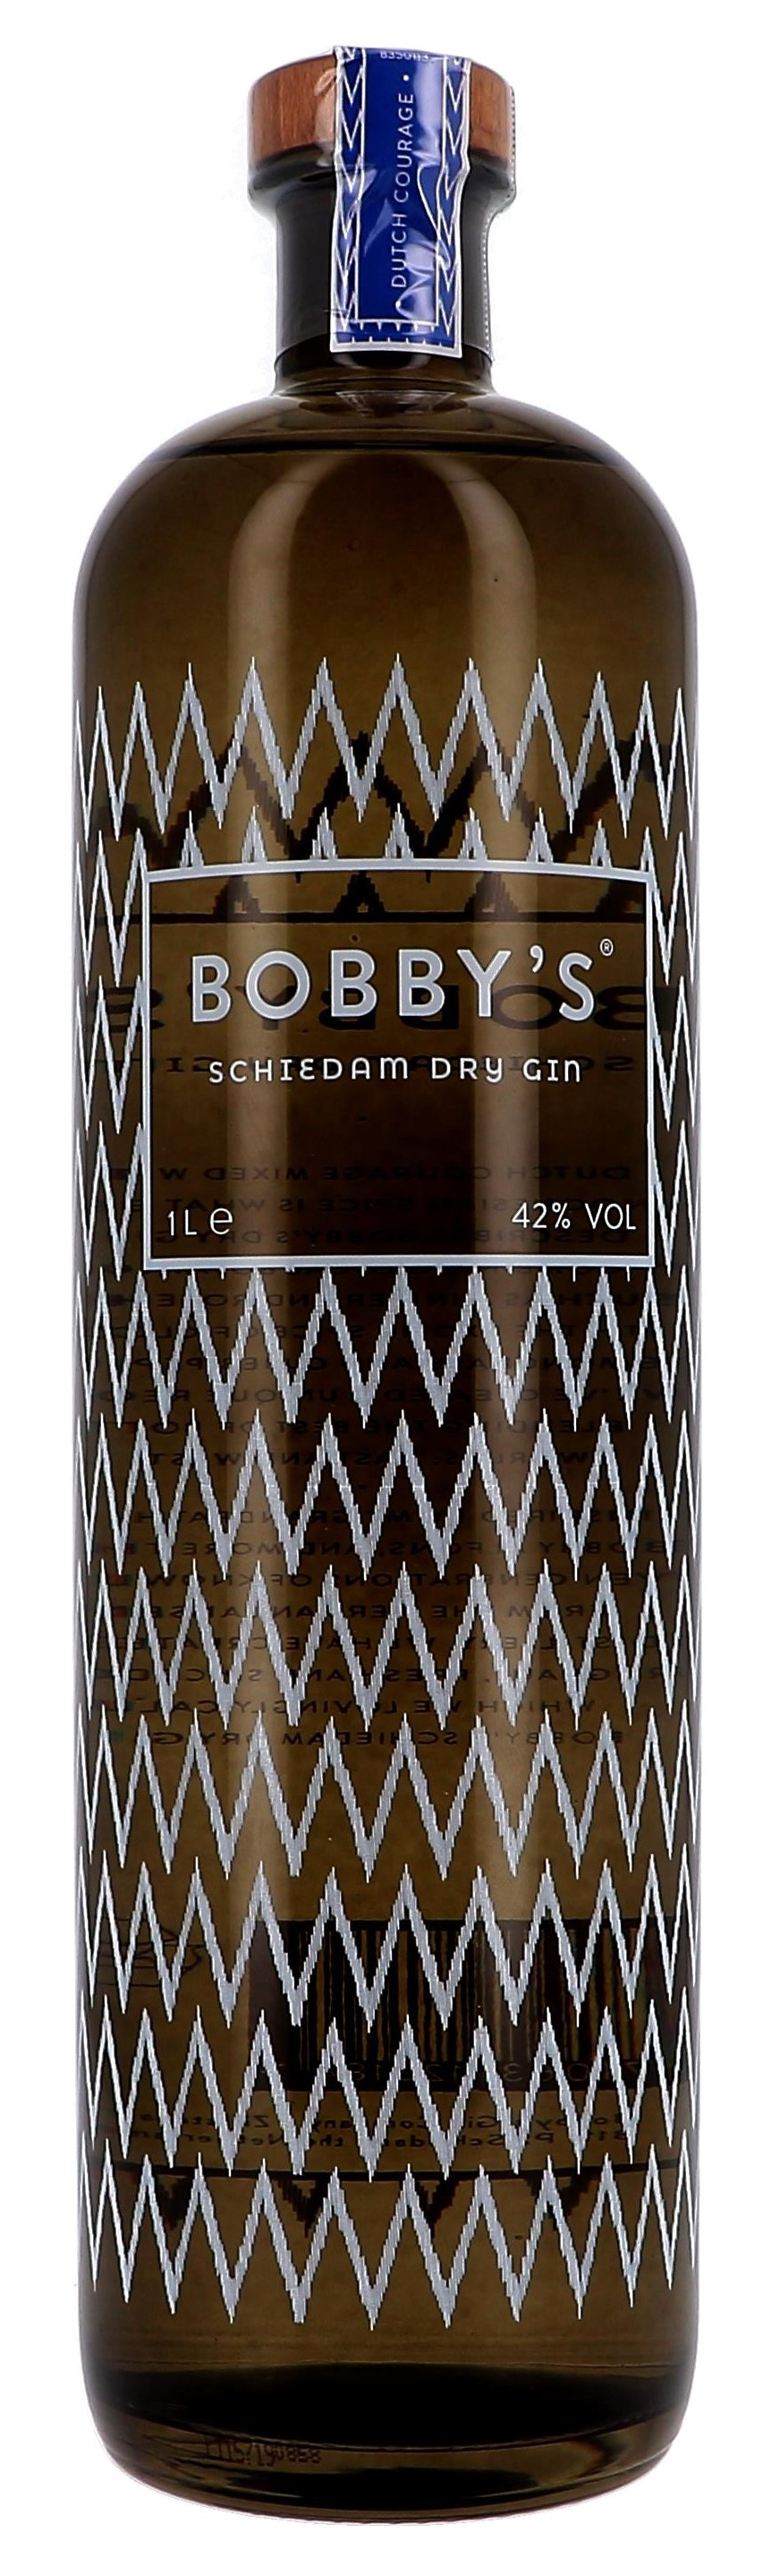 Gin Bobby's 1L 42% Schiedam Dry Gin Nederland